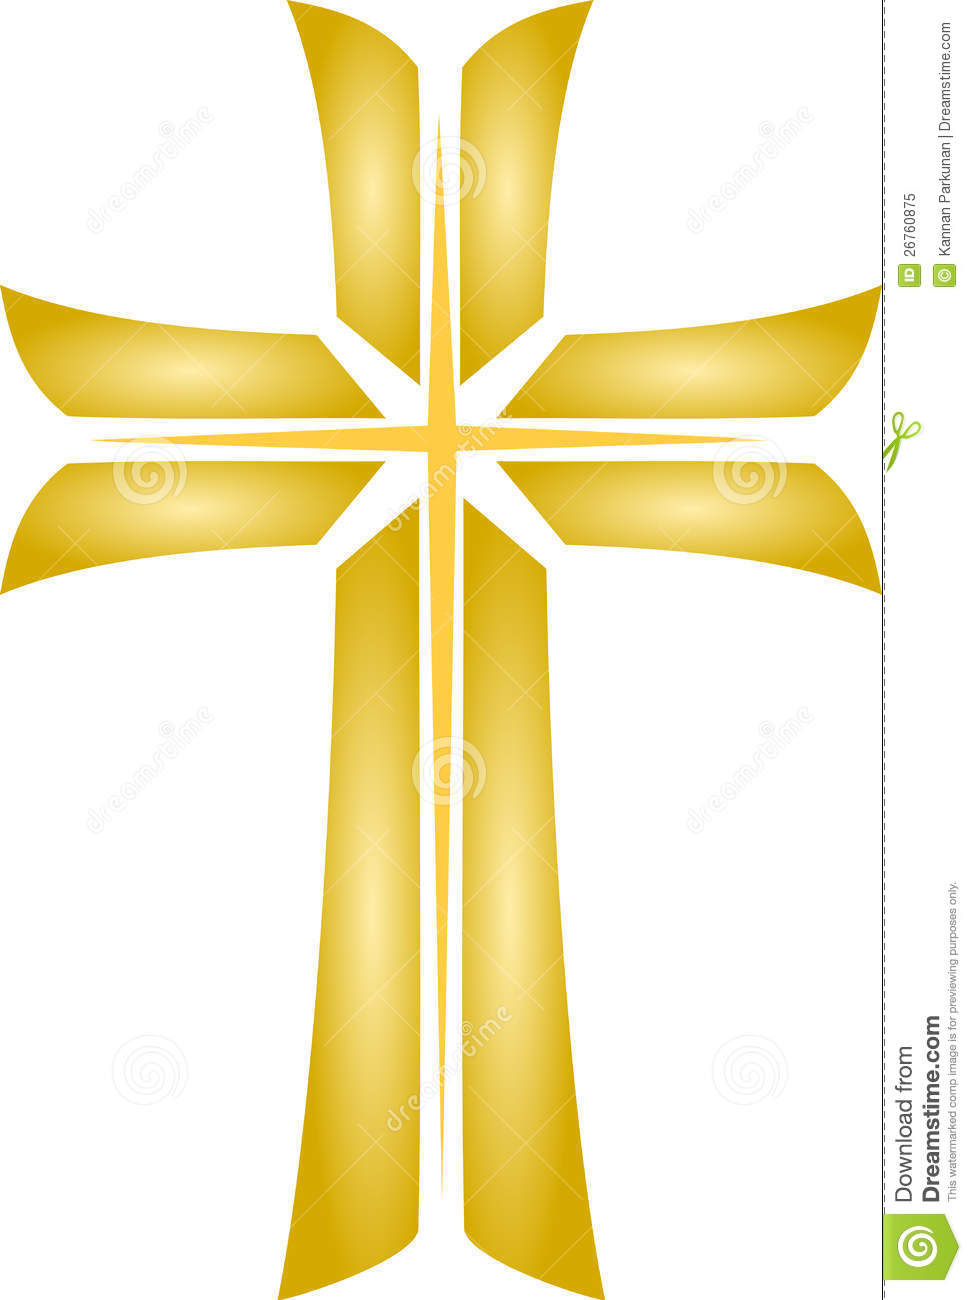 Christian Cross Symbols